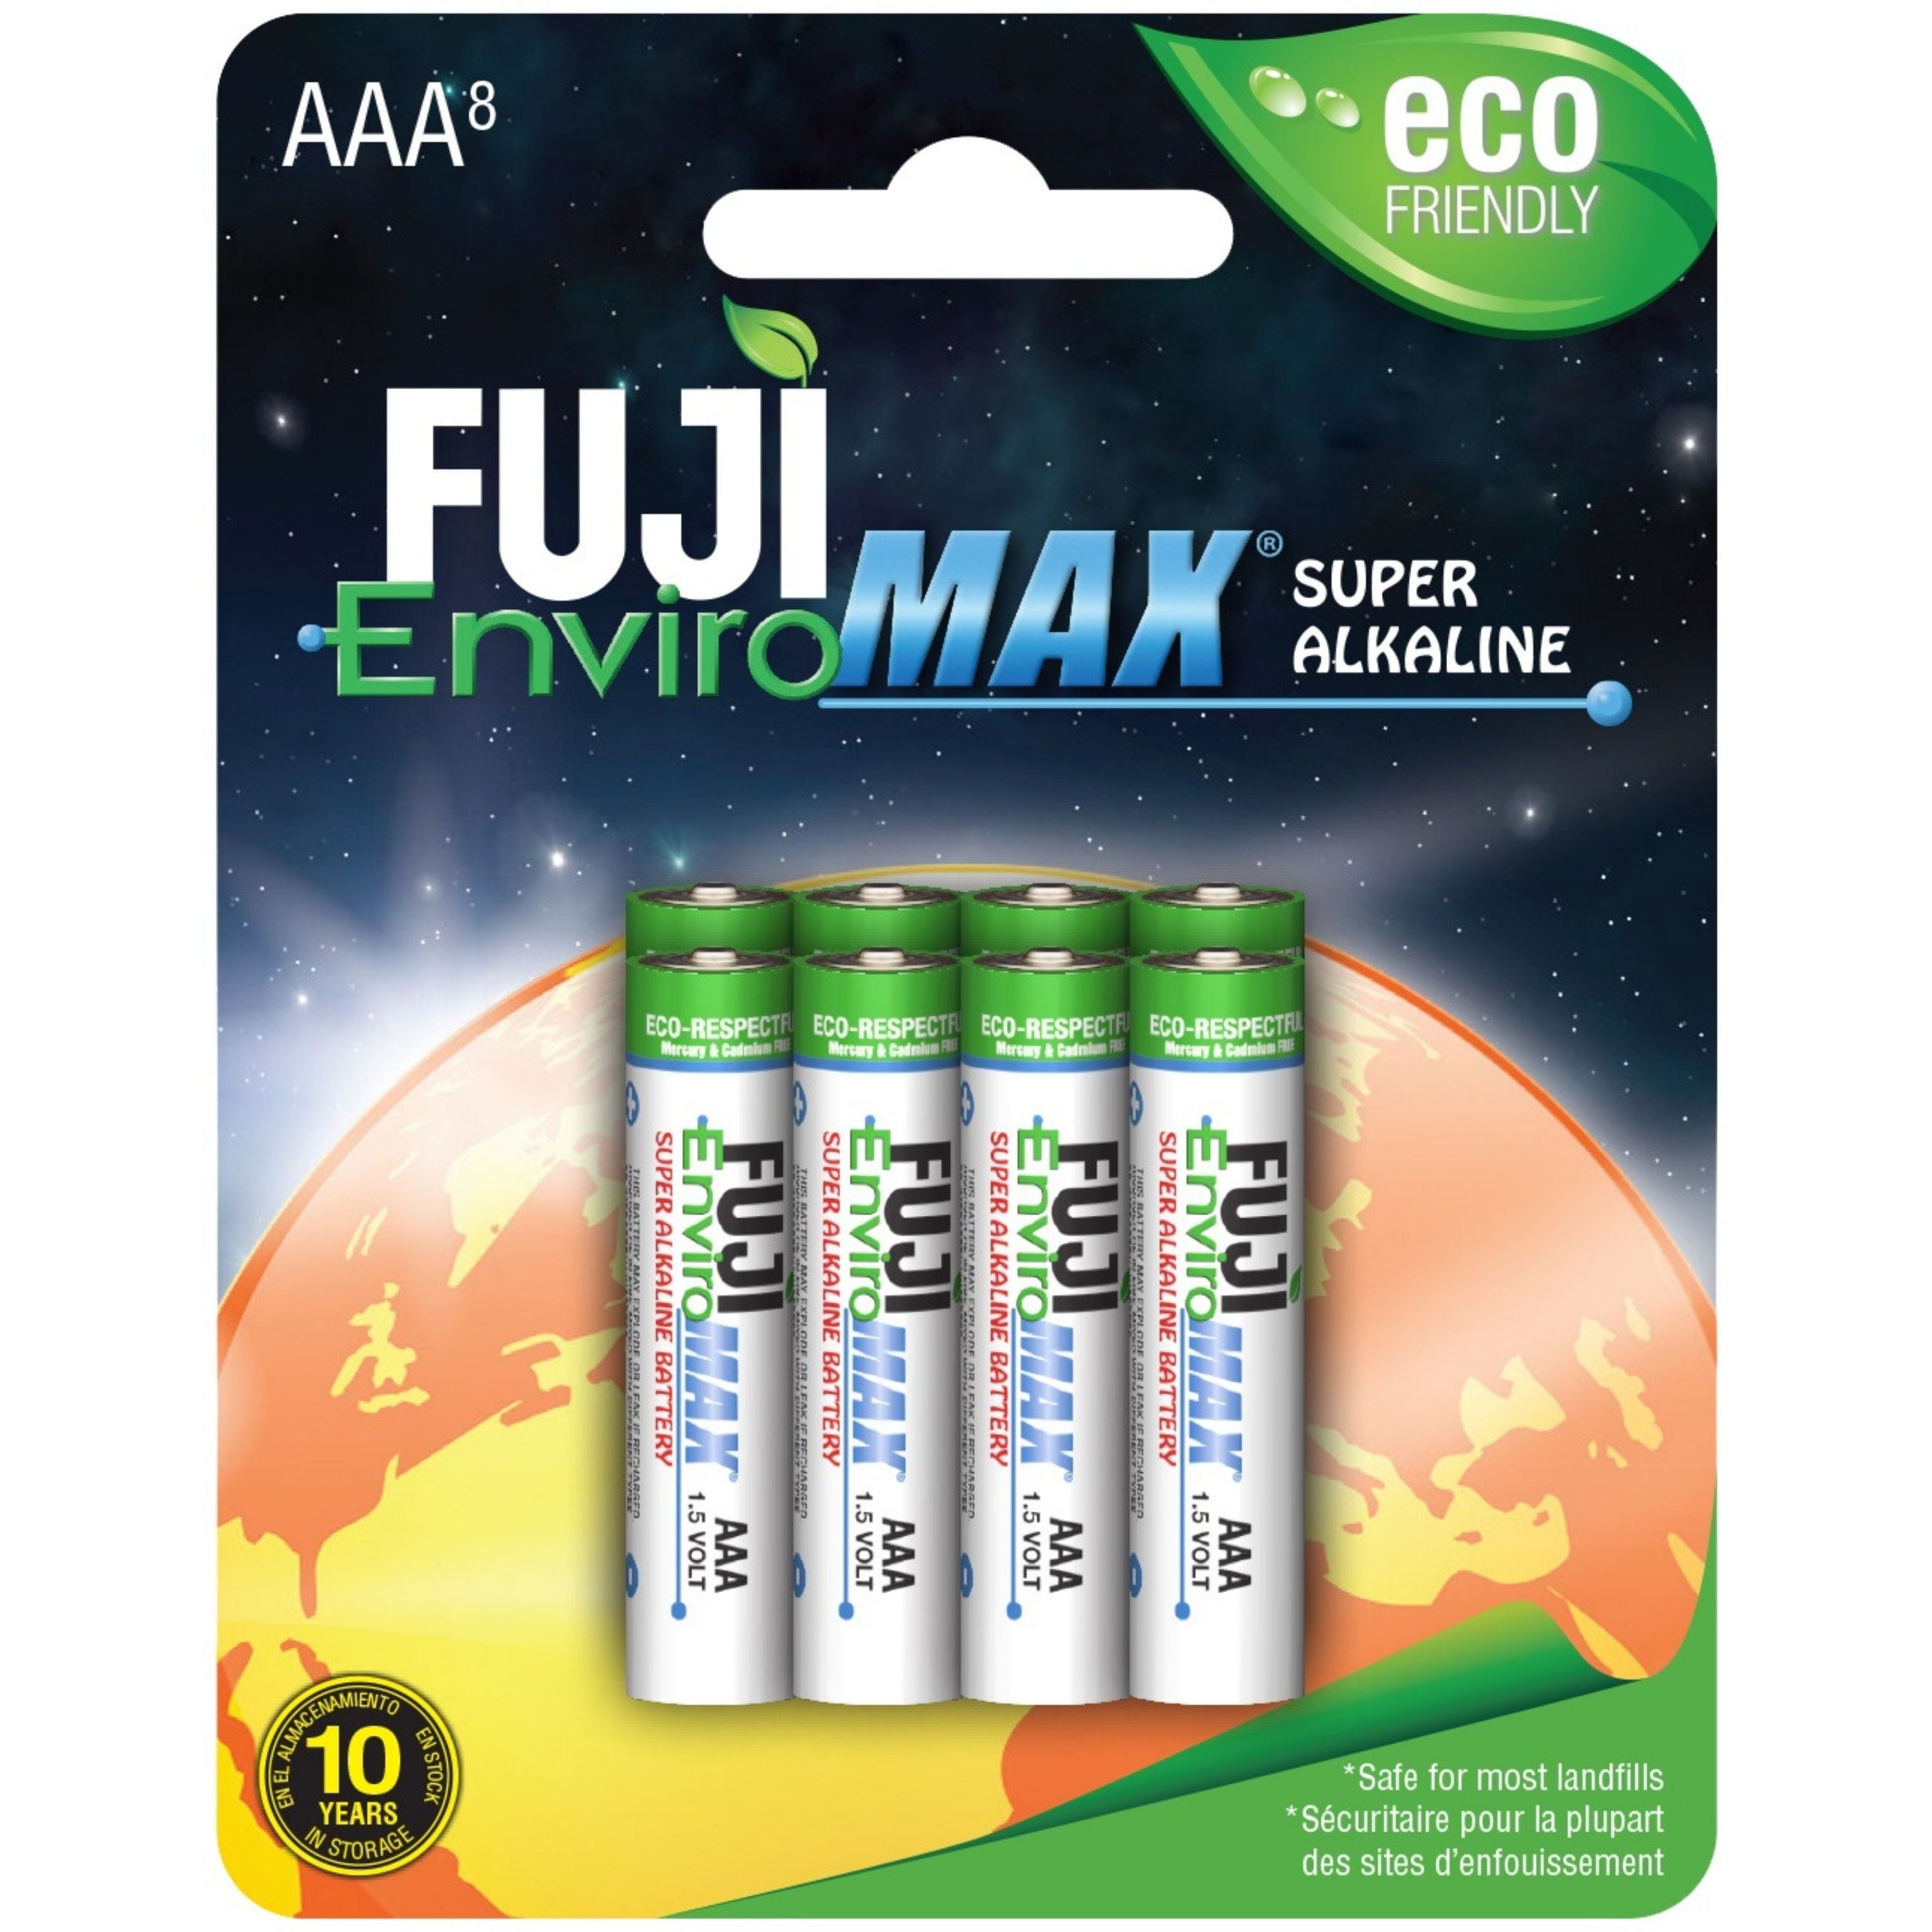  EnviroMAX super alkaline batteries - AAA